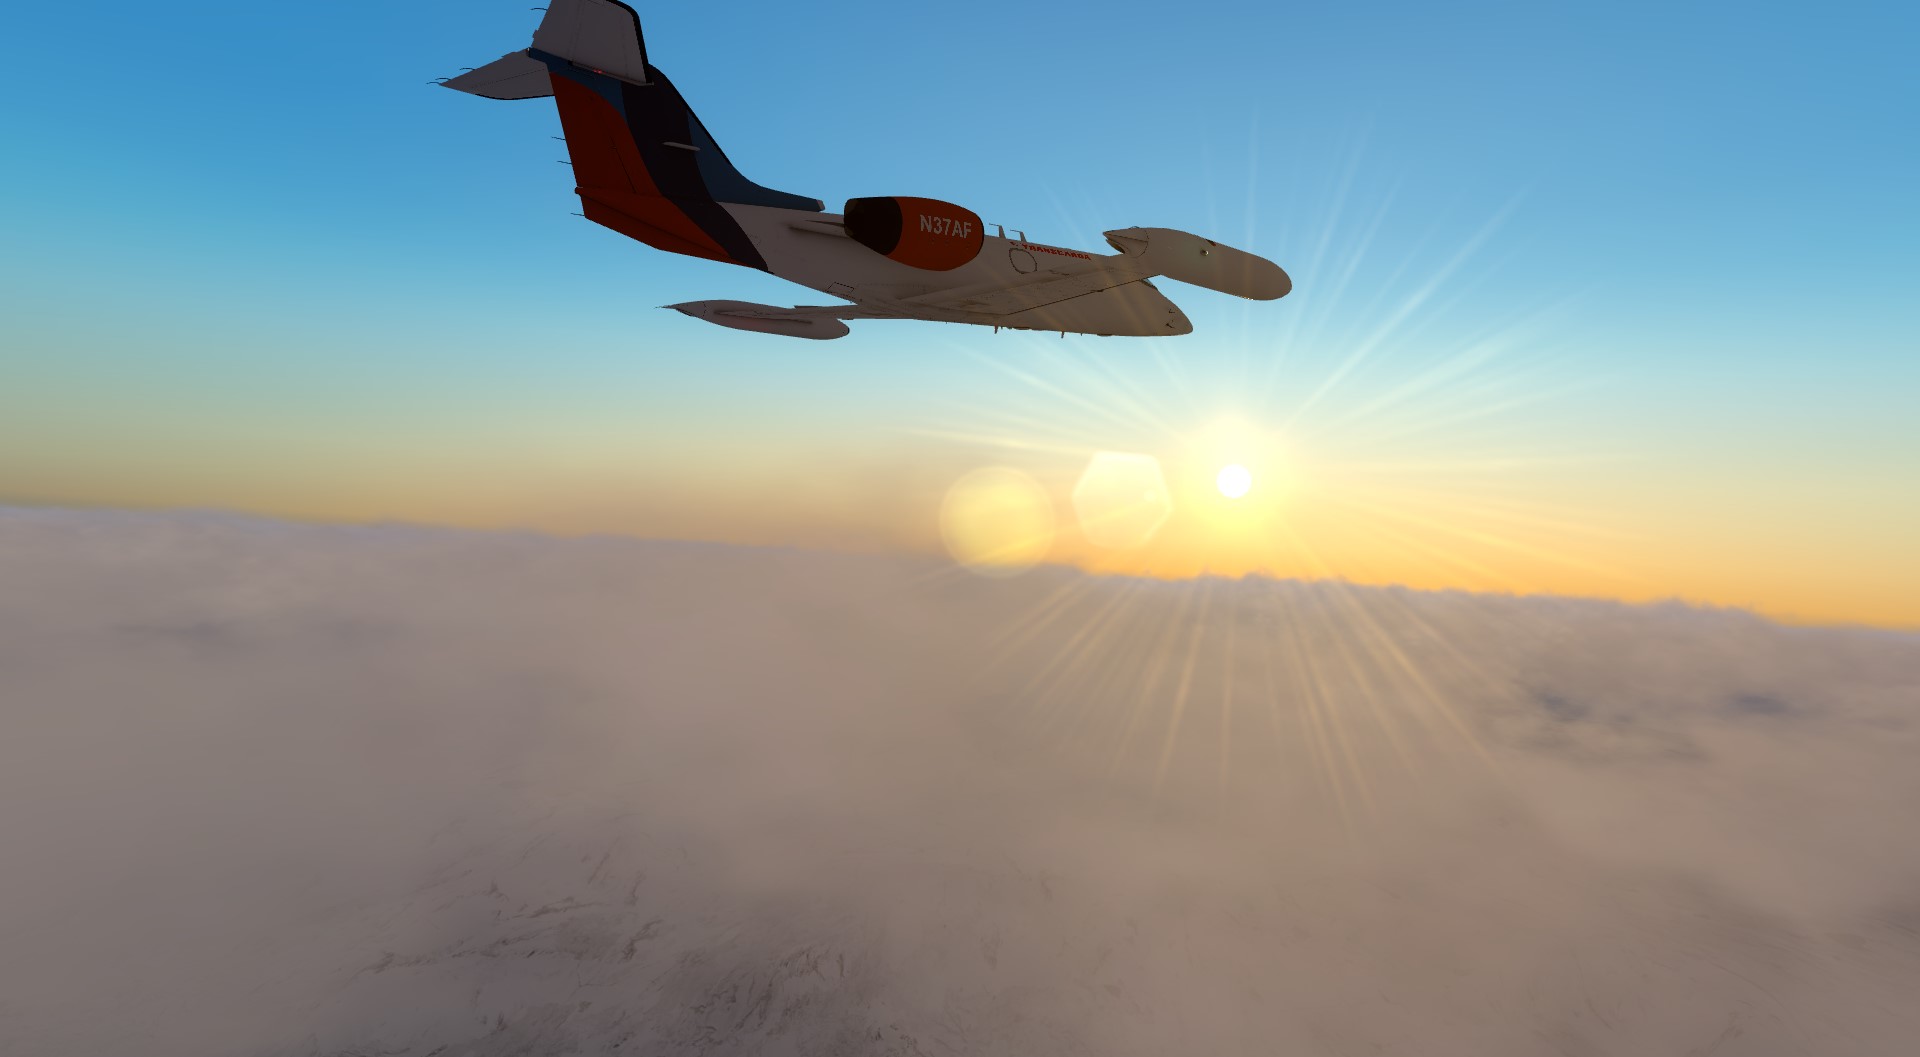 Flysimware – Learjet 35A 评测与冰岛送货之旅-586 